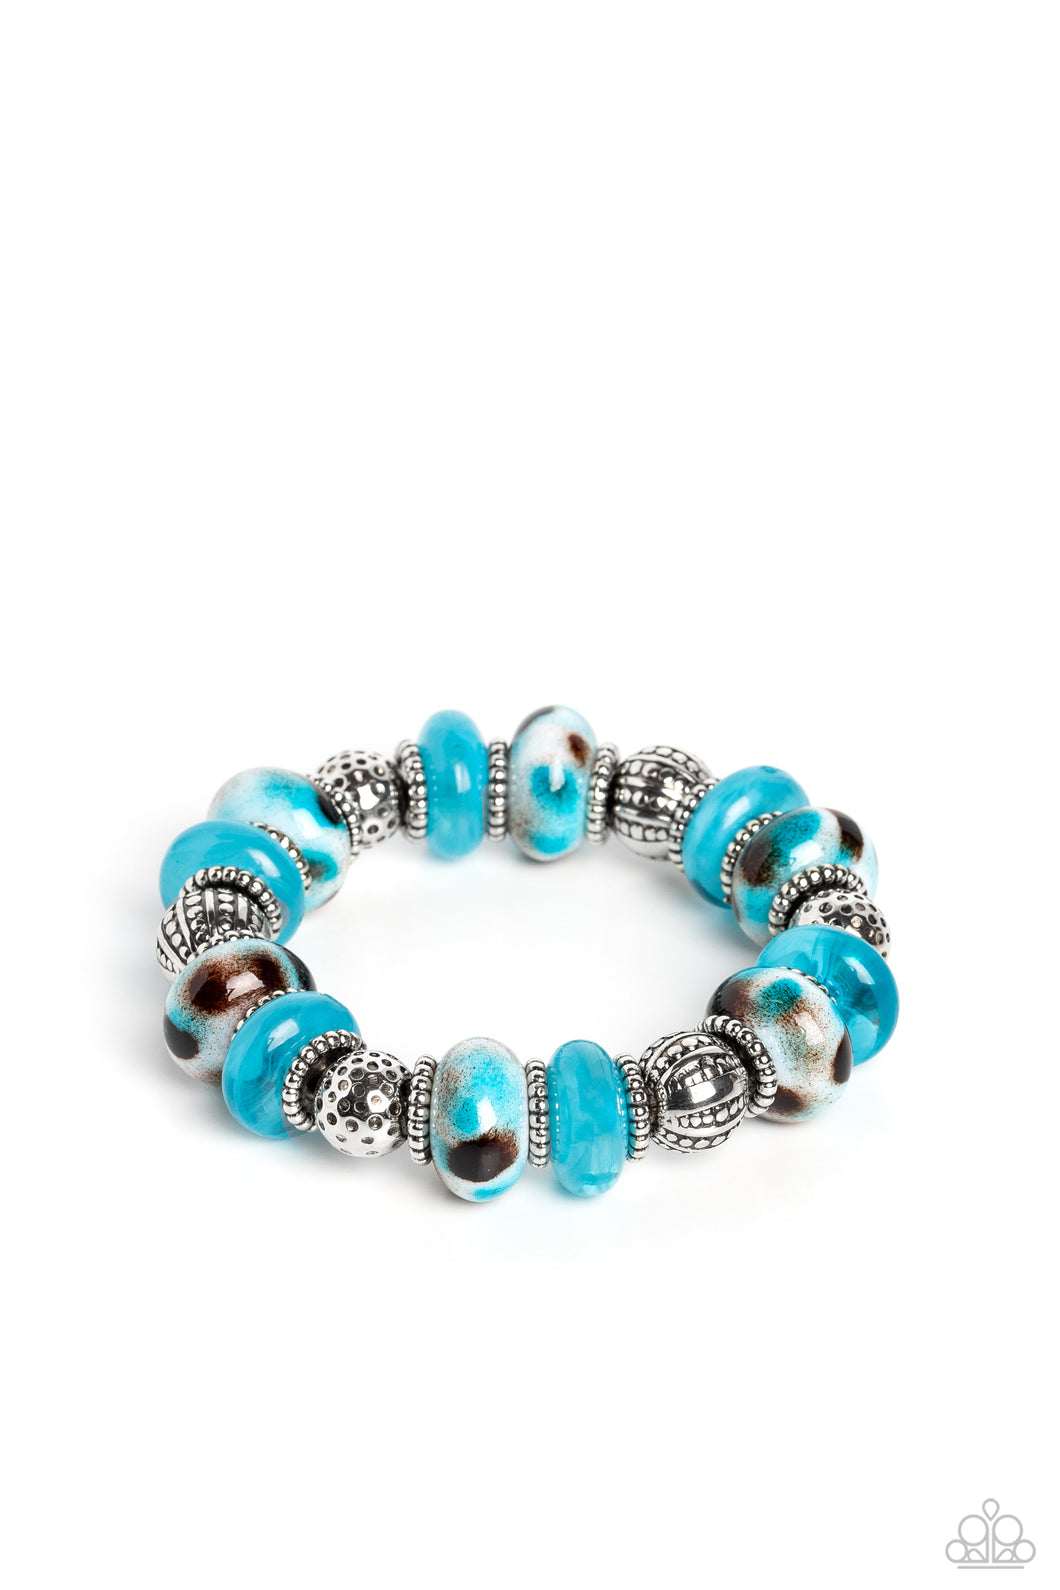 Warped Wayfarer- Blue (Turquoise and Silver Beads) Bracelet